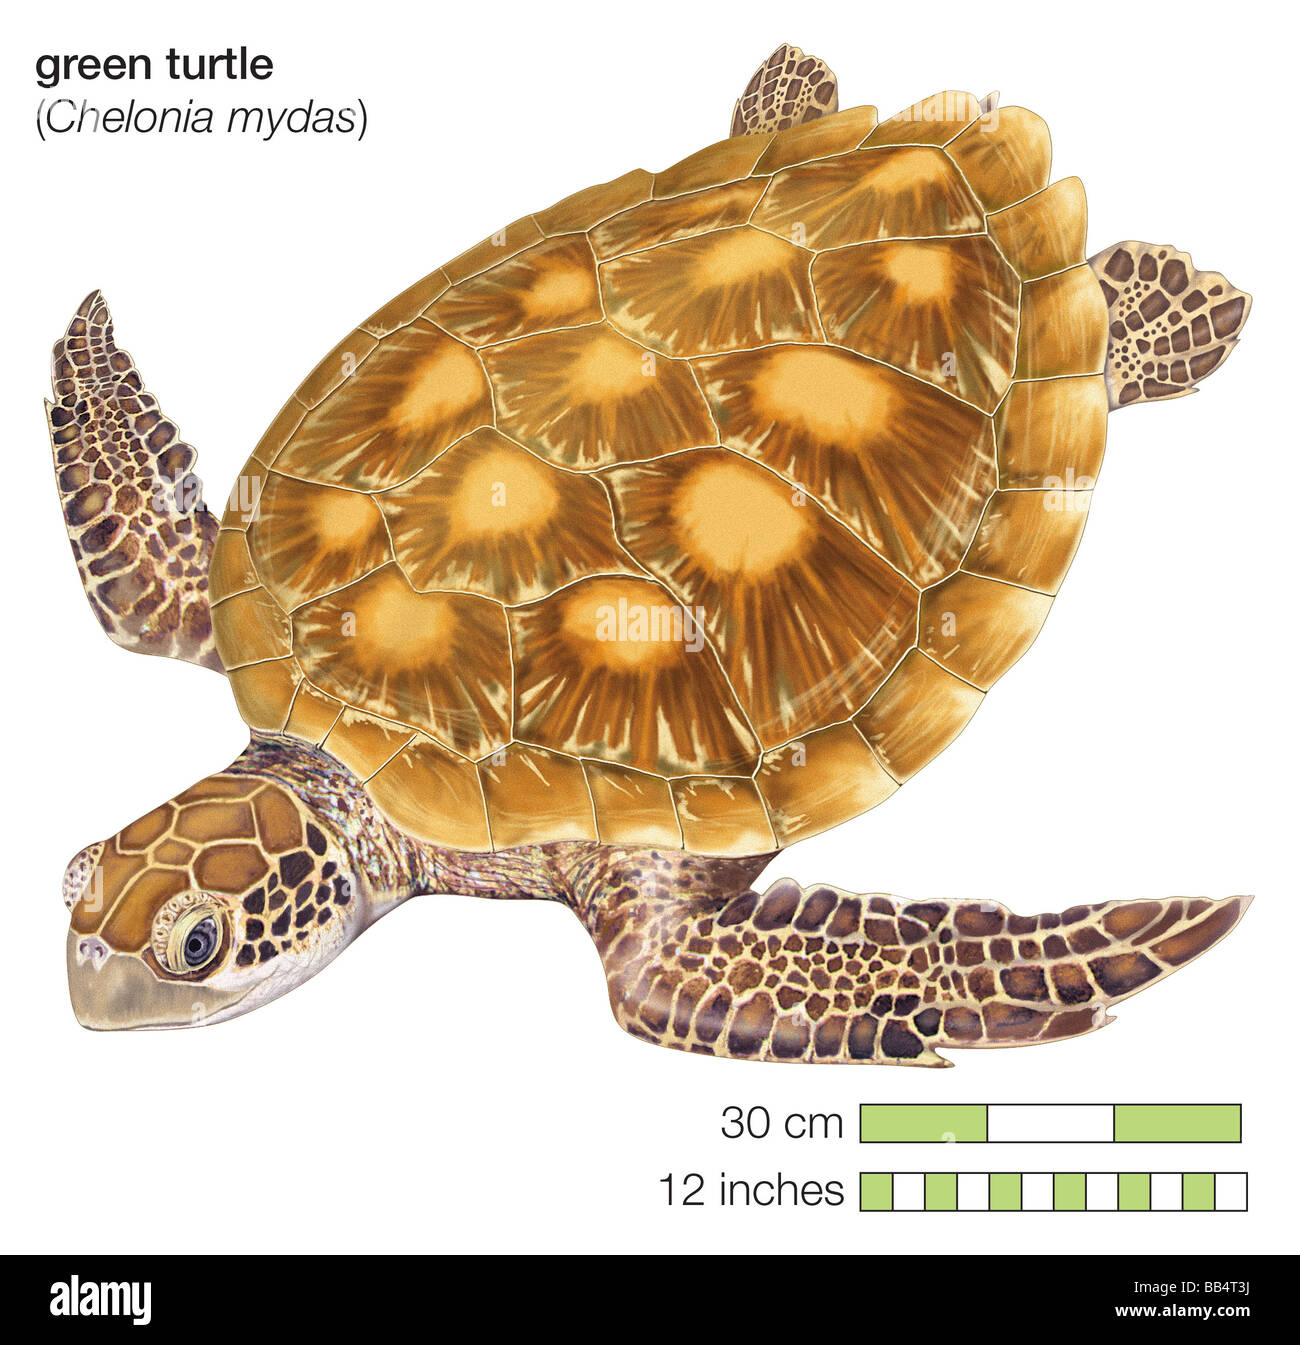 Green turtle (Chelonia mydas) Stock Photo